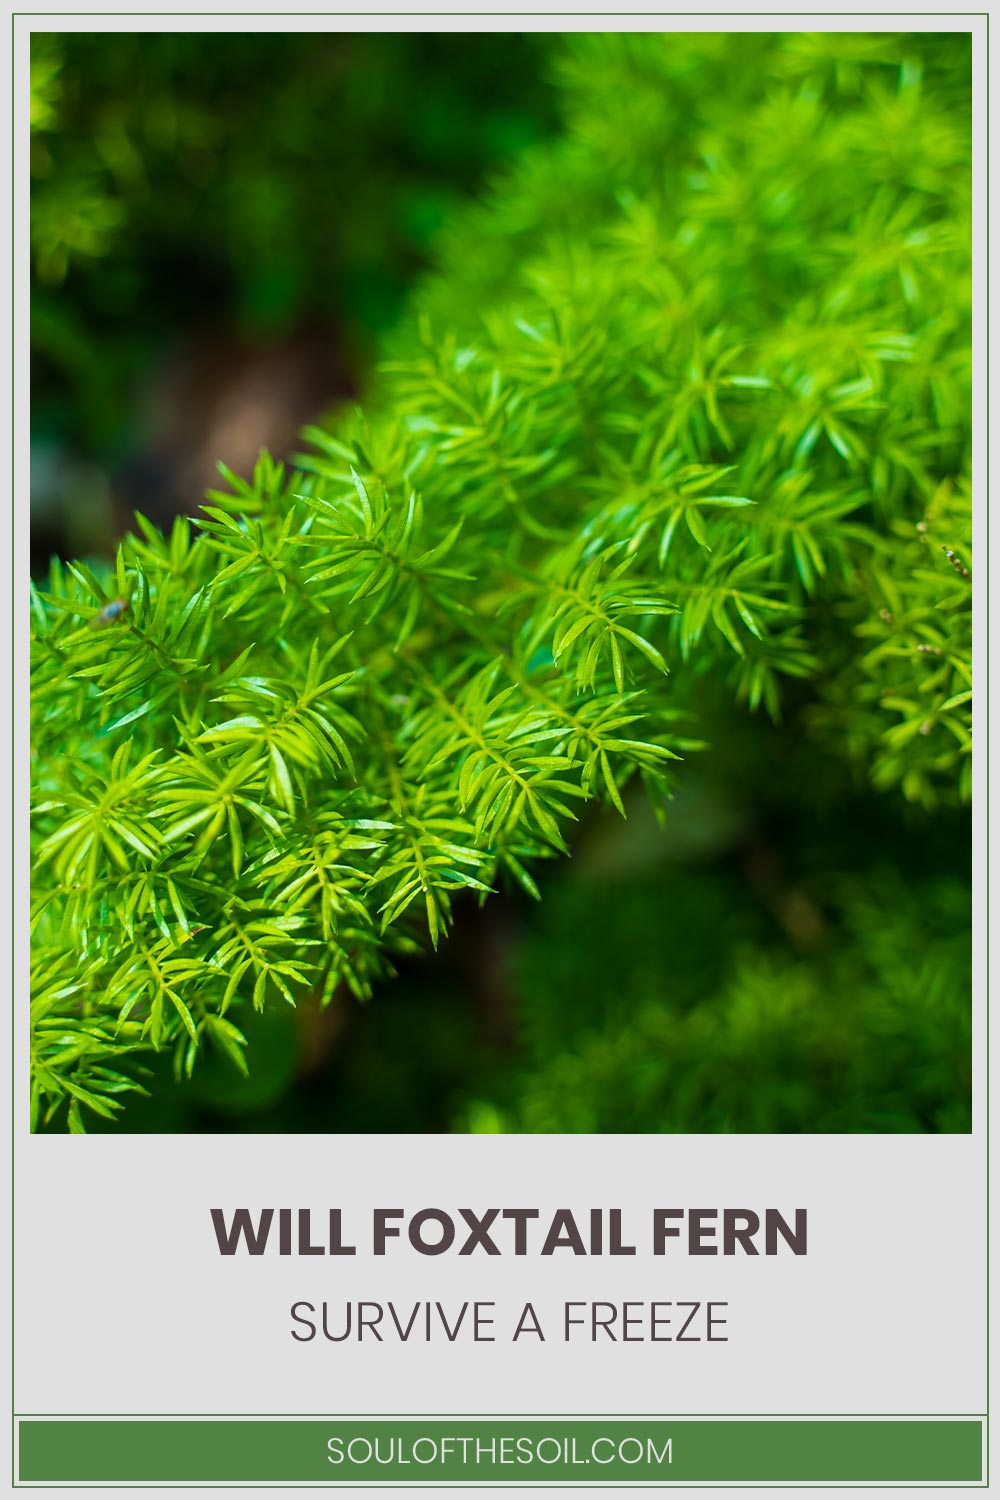 Will Foxtail Fern Survive a Freeze